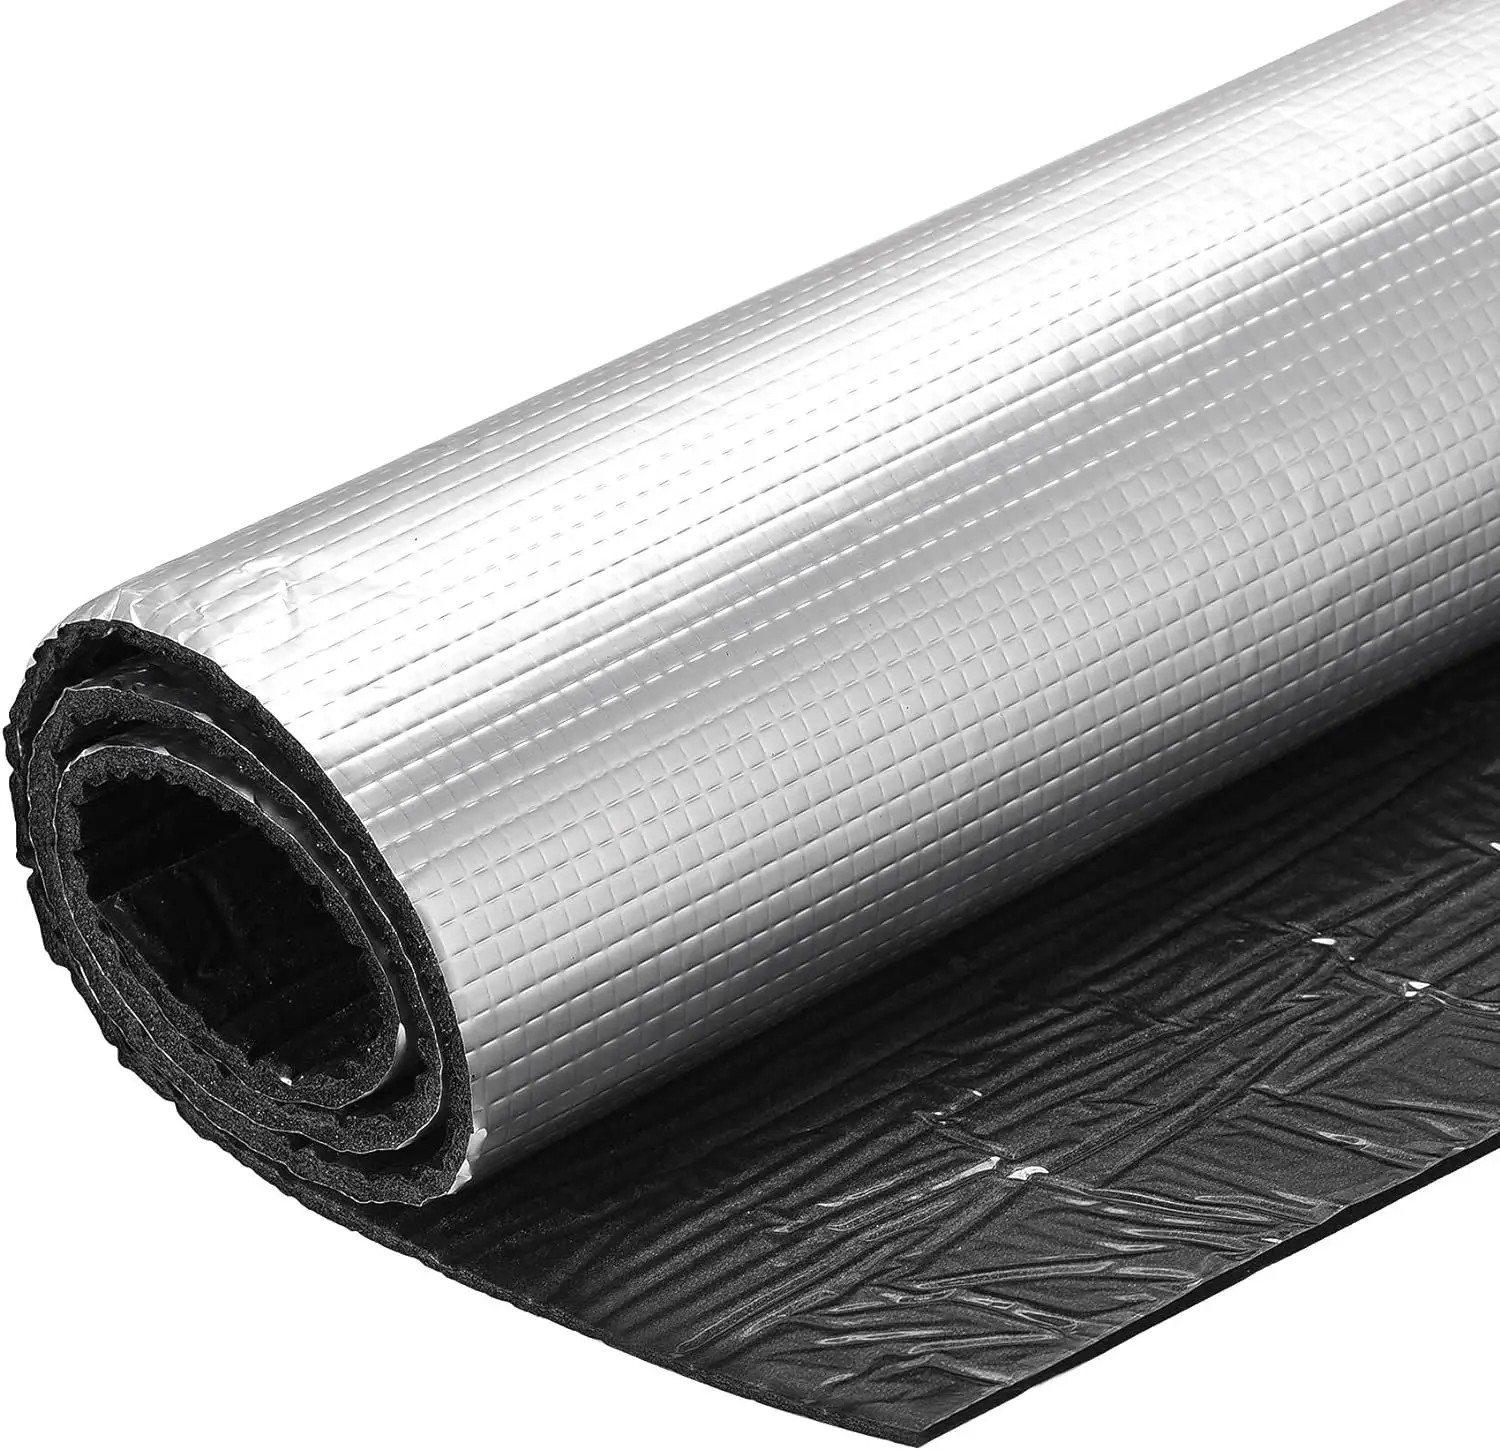 Insulation Sheet, 1mx0.5mx5mm Self-Adhesive Embossed Aluminum Foil Waterproof Heat Resistant Thermal Barrier Rubber Foam